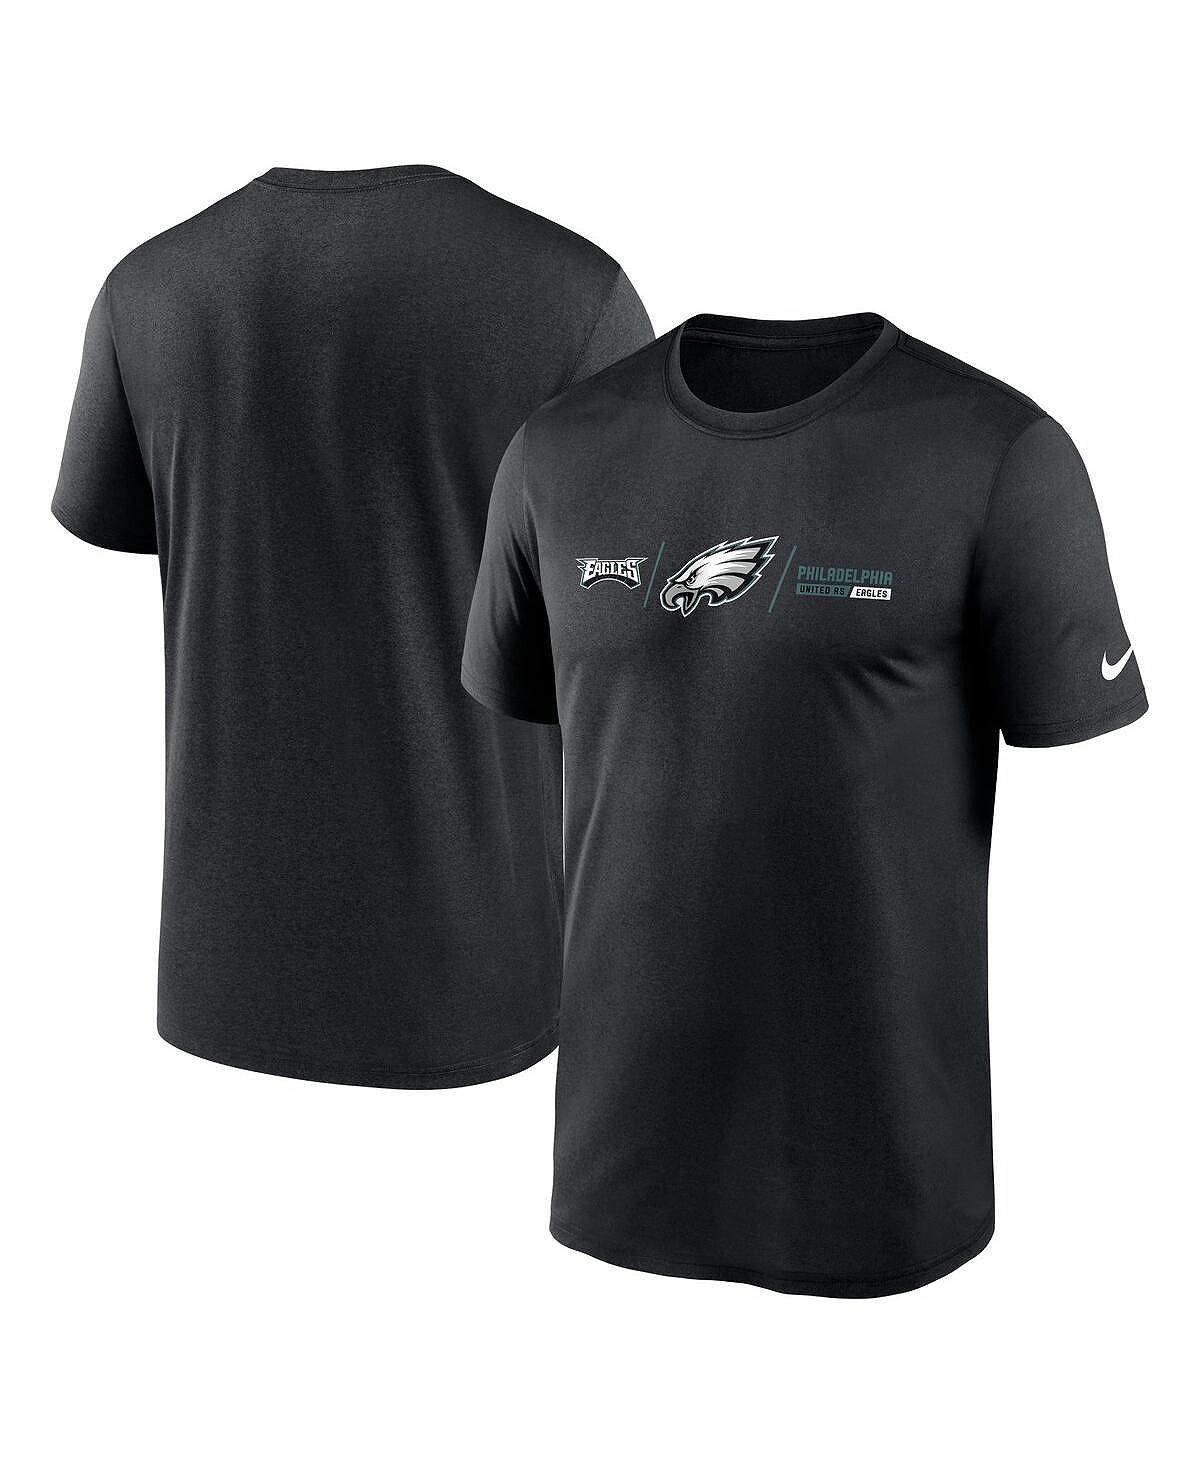 wideman j philadelphia fire Мужская черная футболка philadelphia eagles horizontal lockup legend Nike, черный